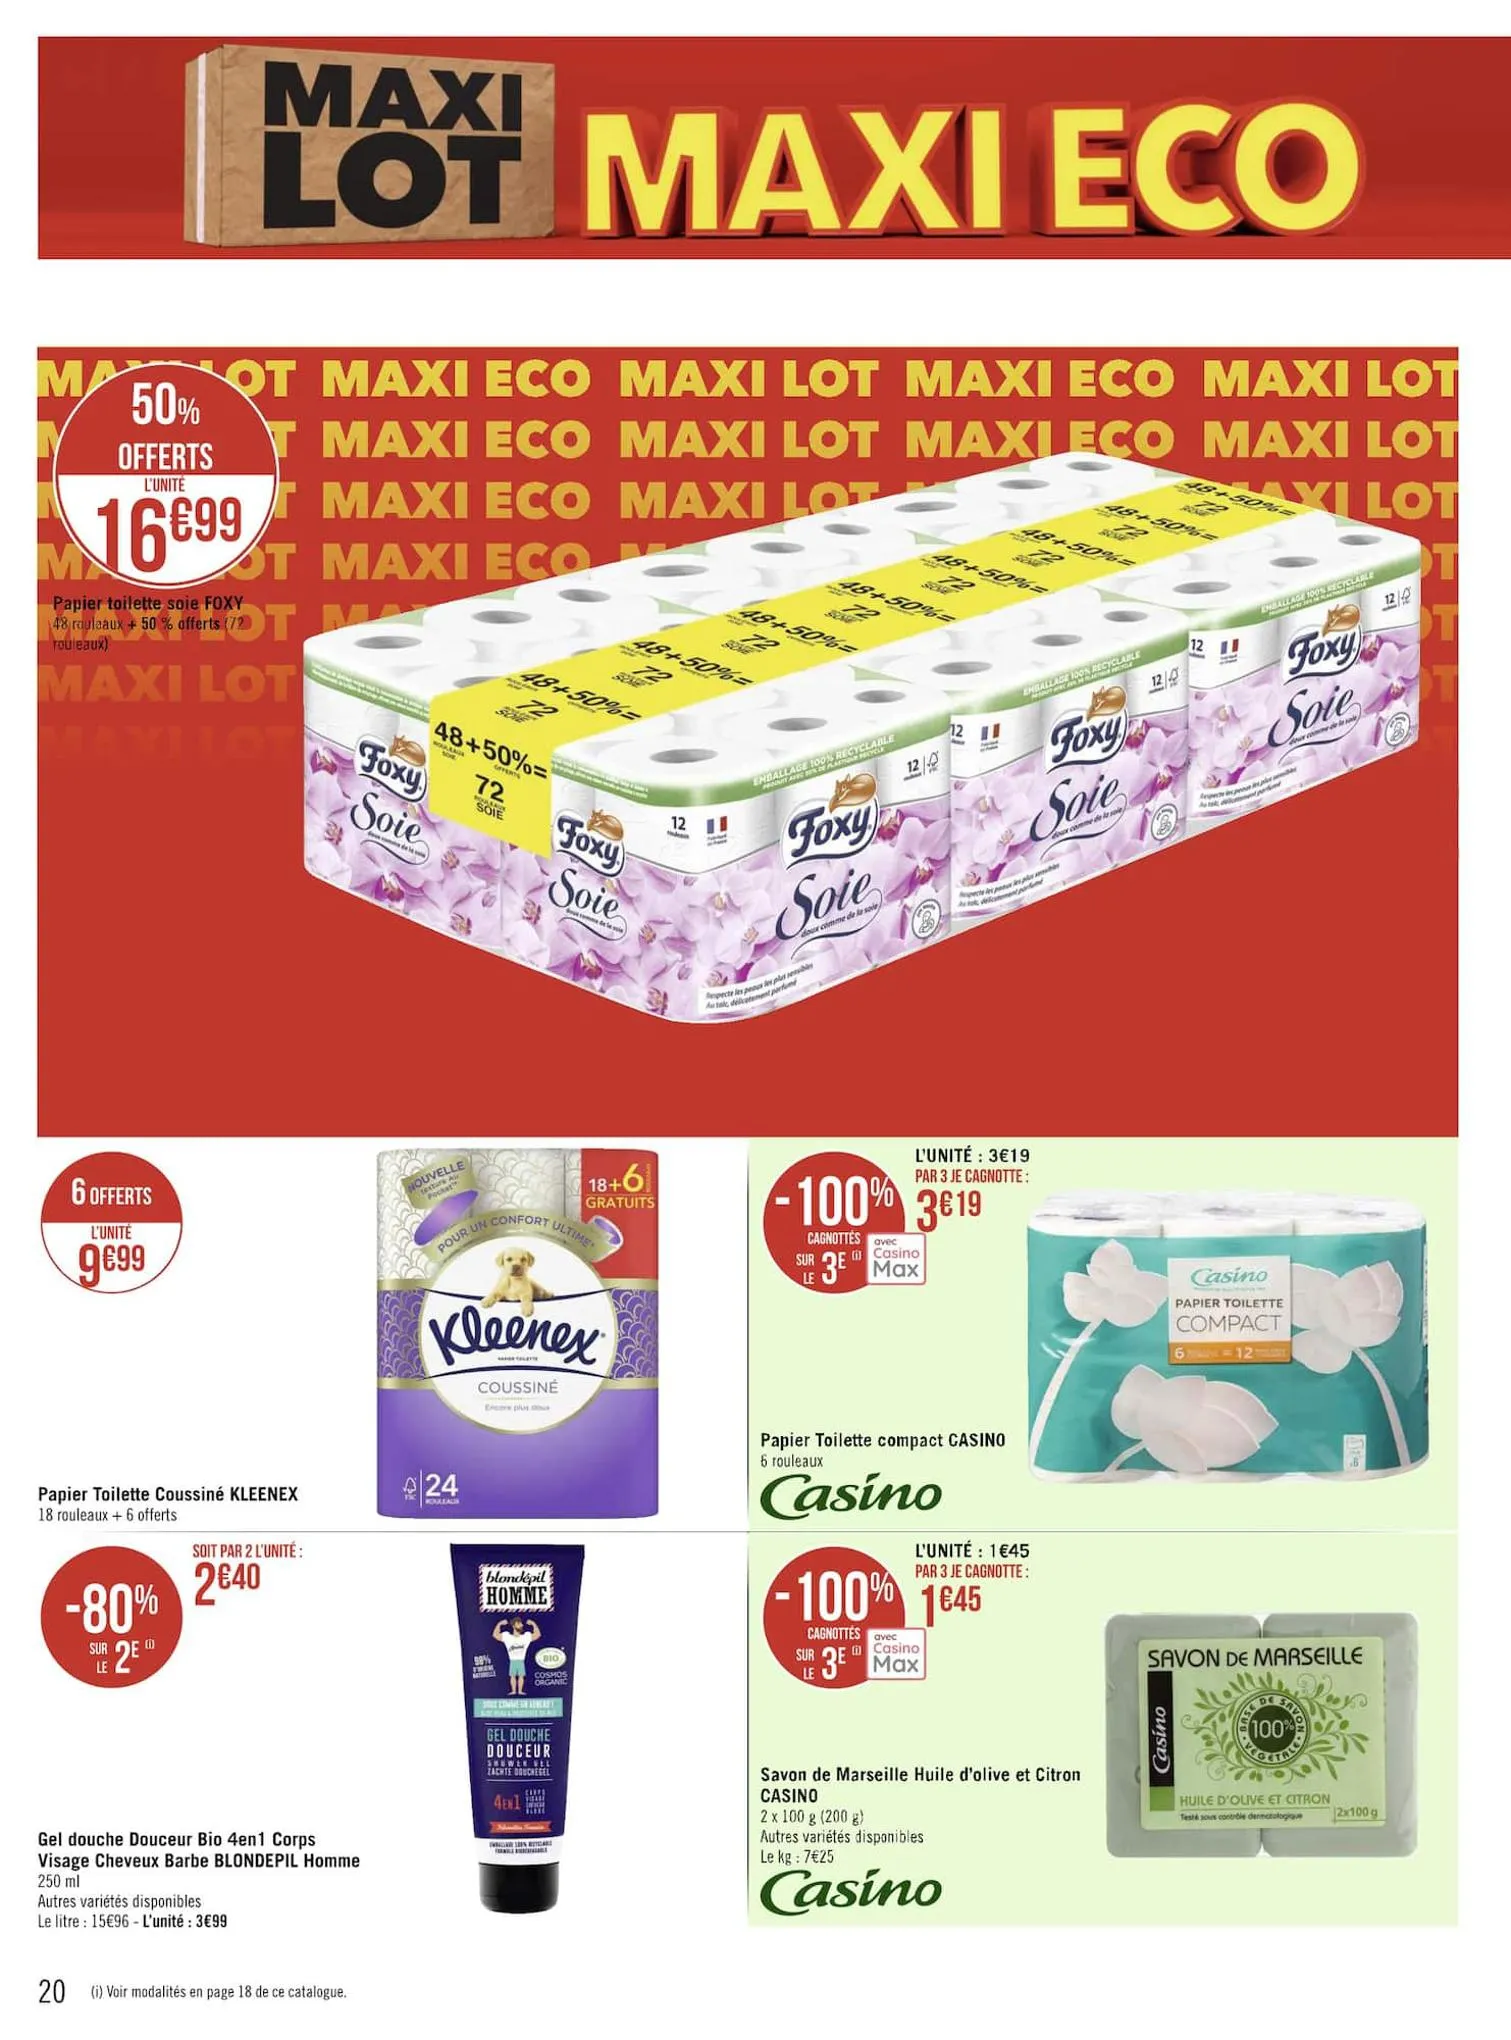 Catalogue Maxi lot, maxi eco, page 00020